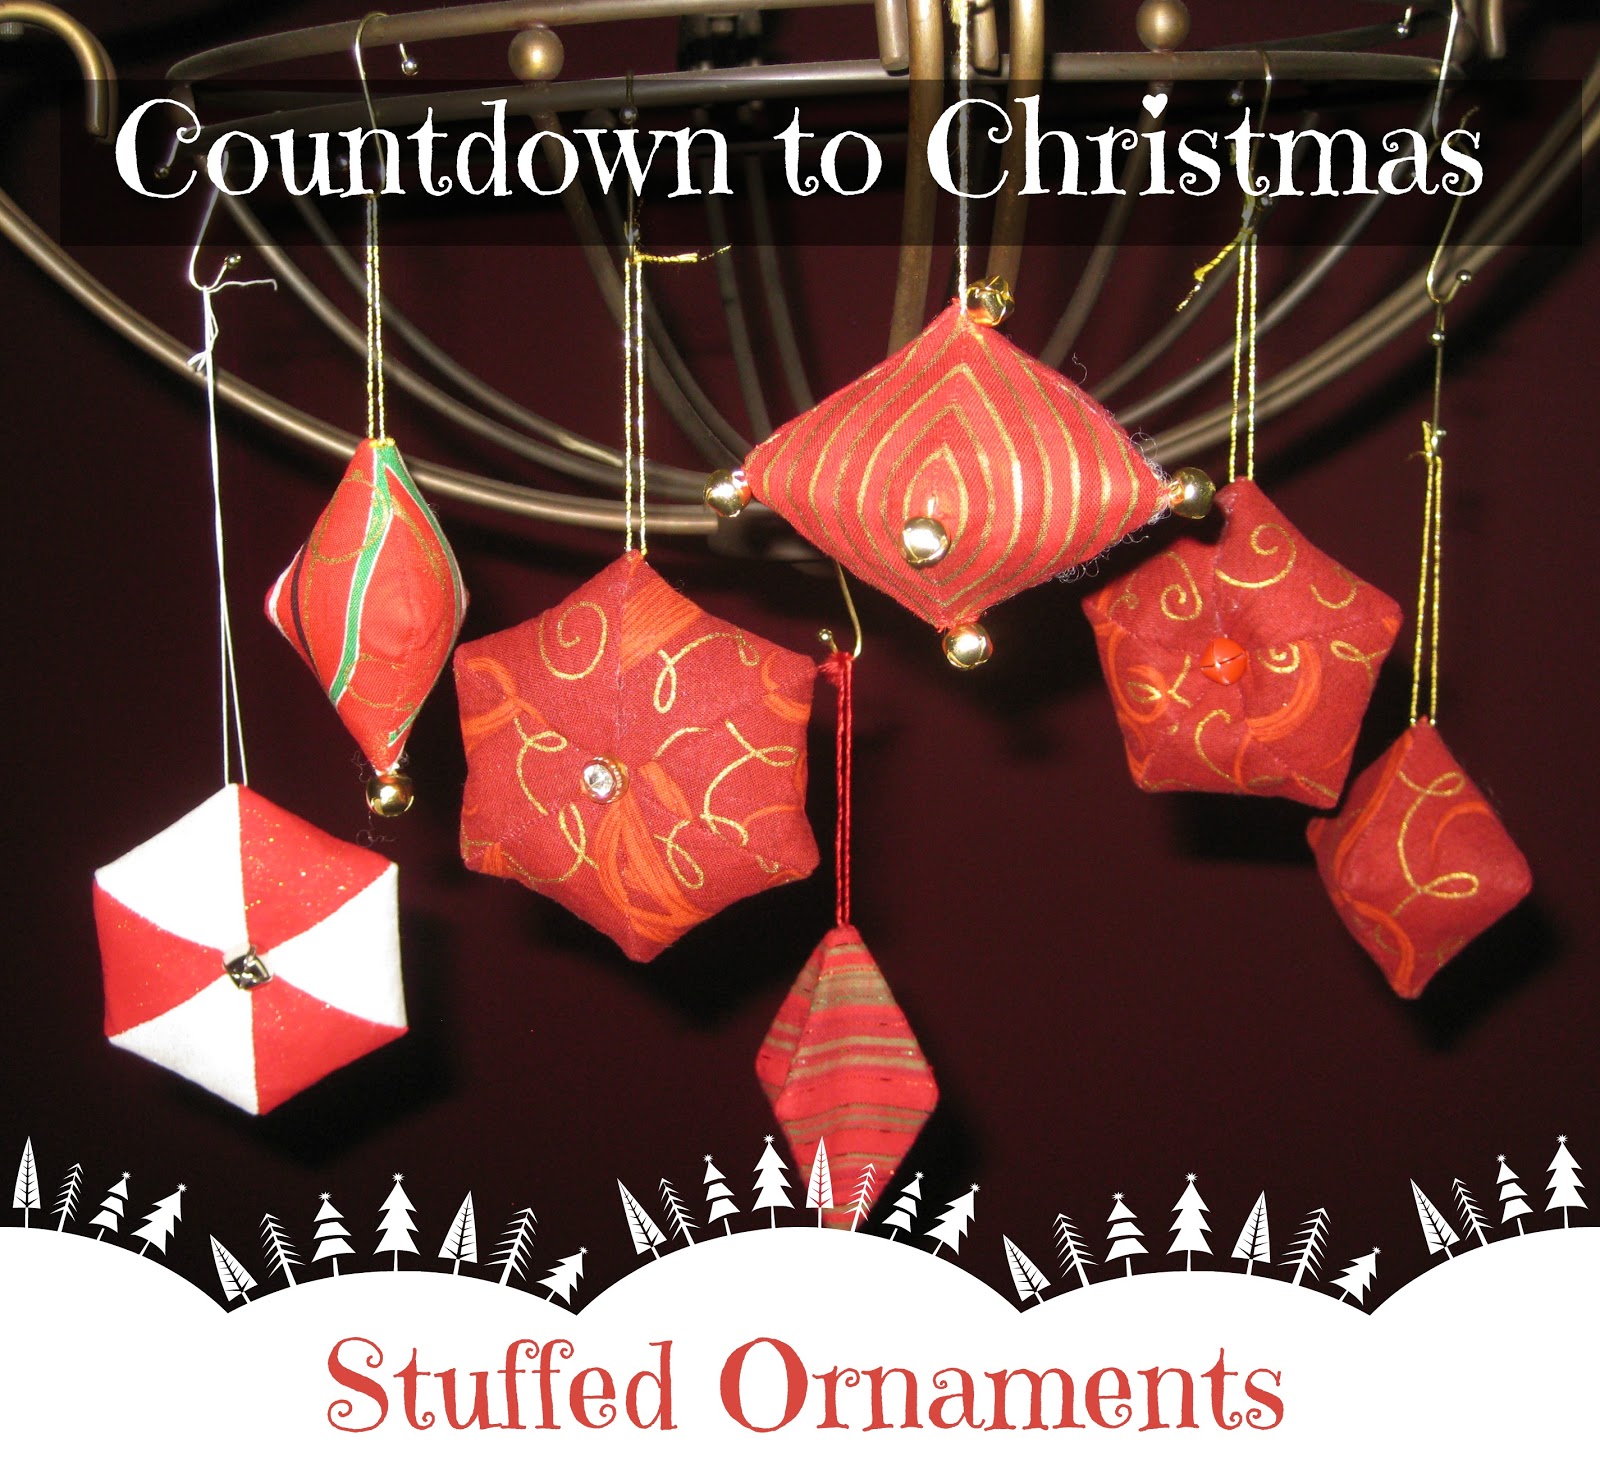 Stuffed Ornaments